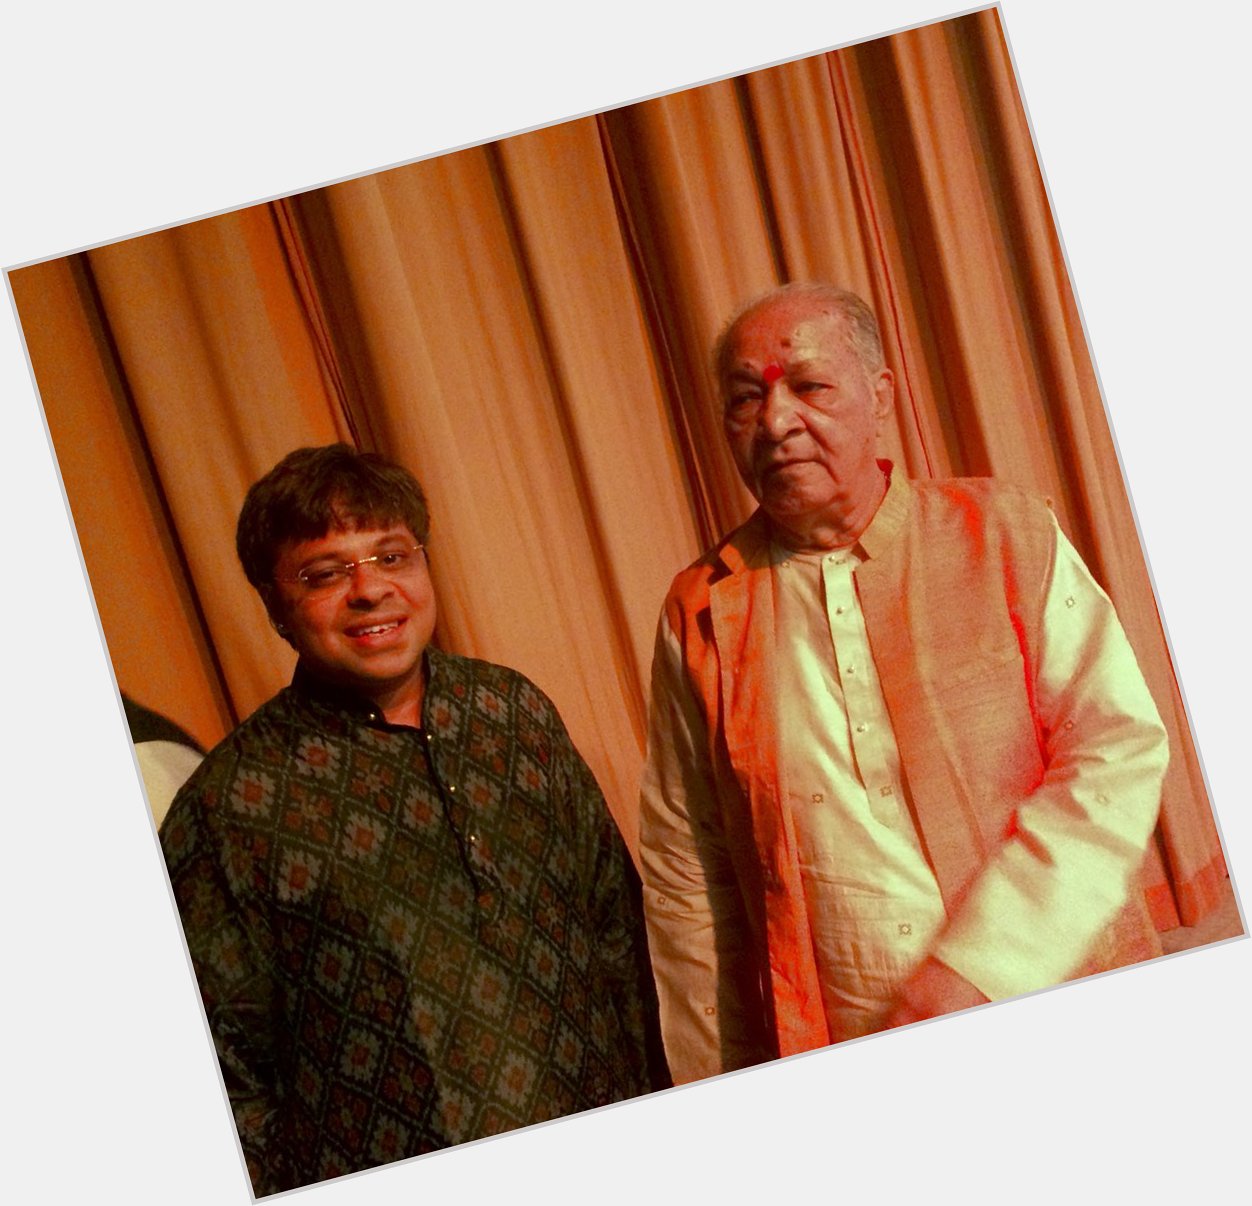 Wishing the Flute legend Pt. Hariprasad Chaurasia ji a very happy birthday. Pranams! 